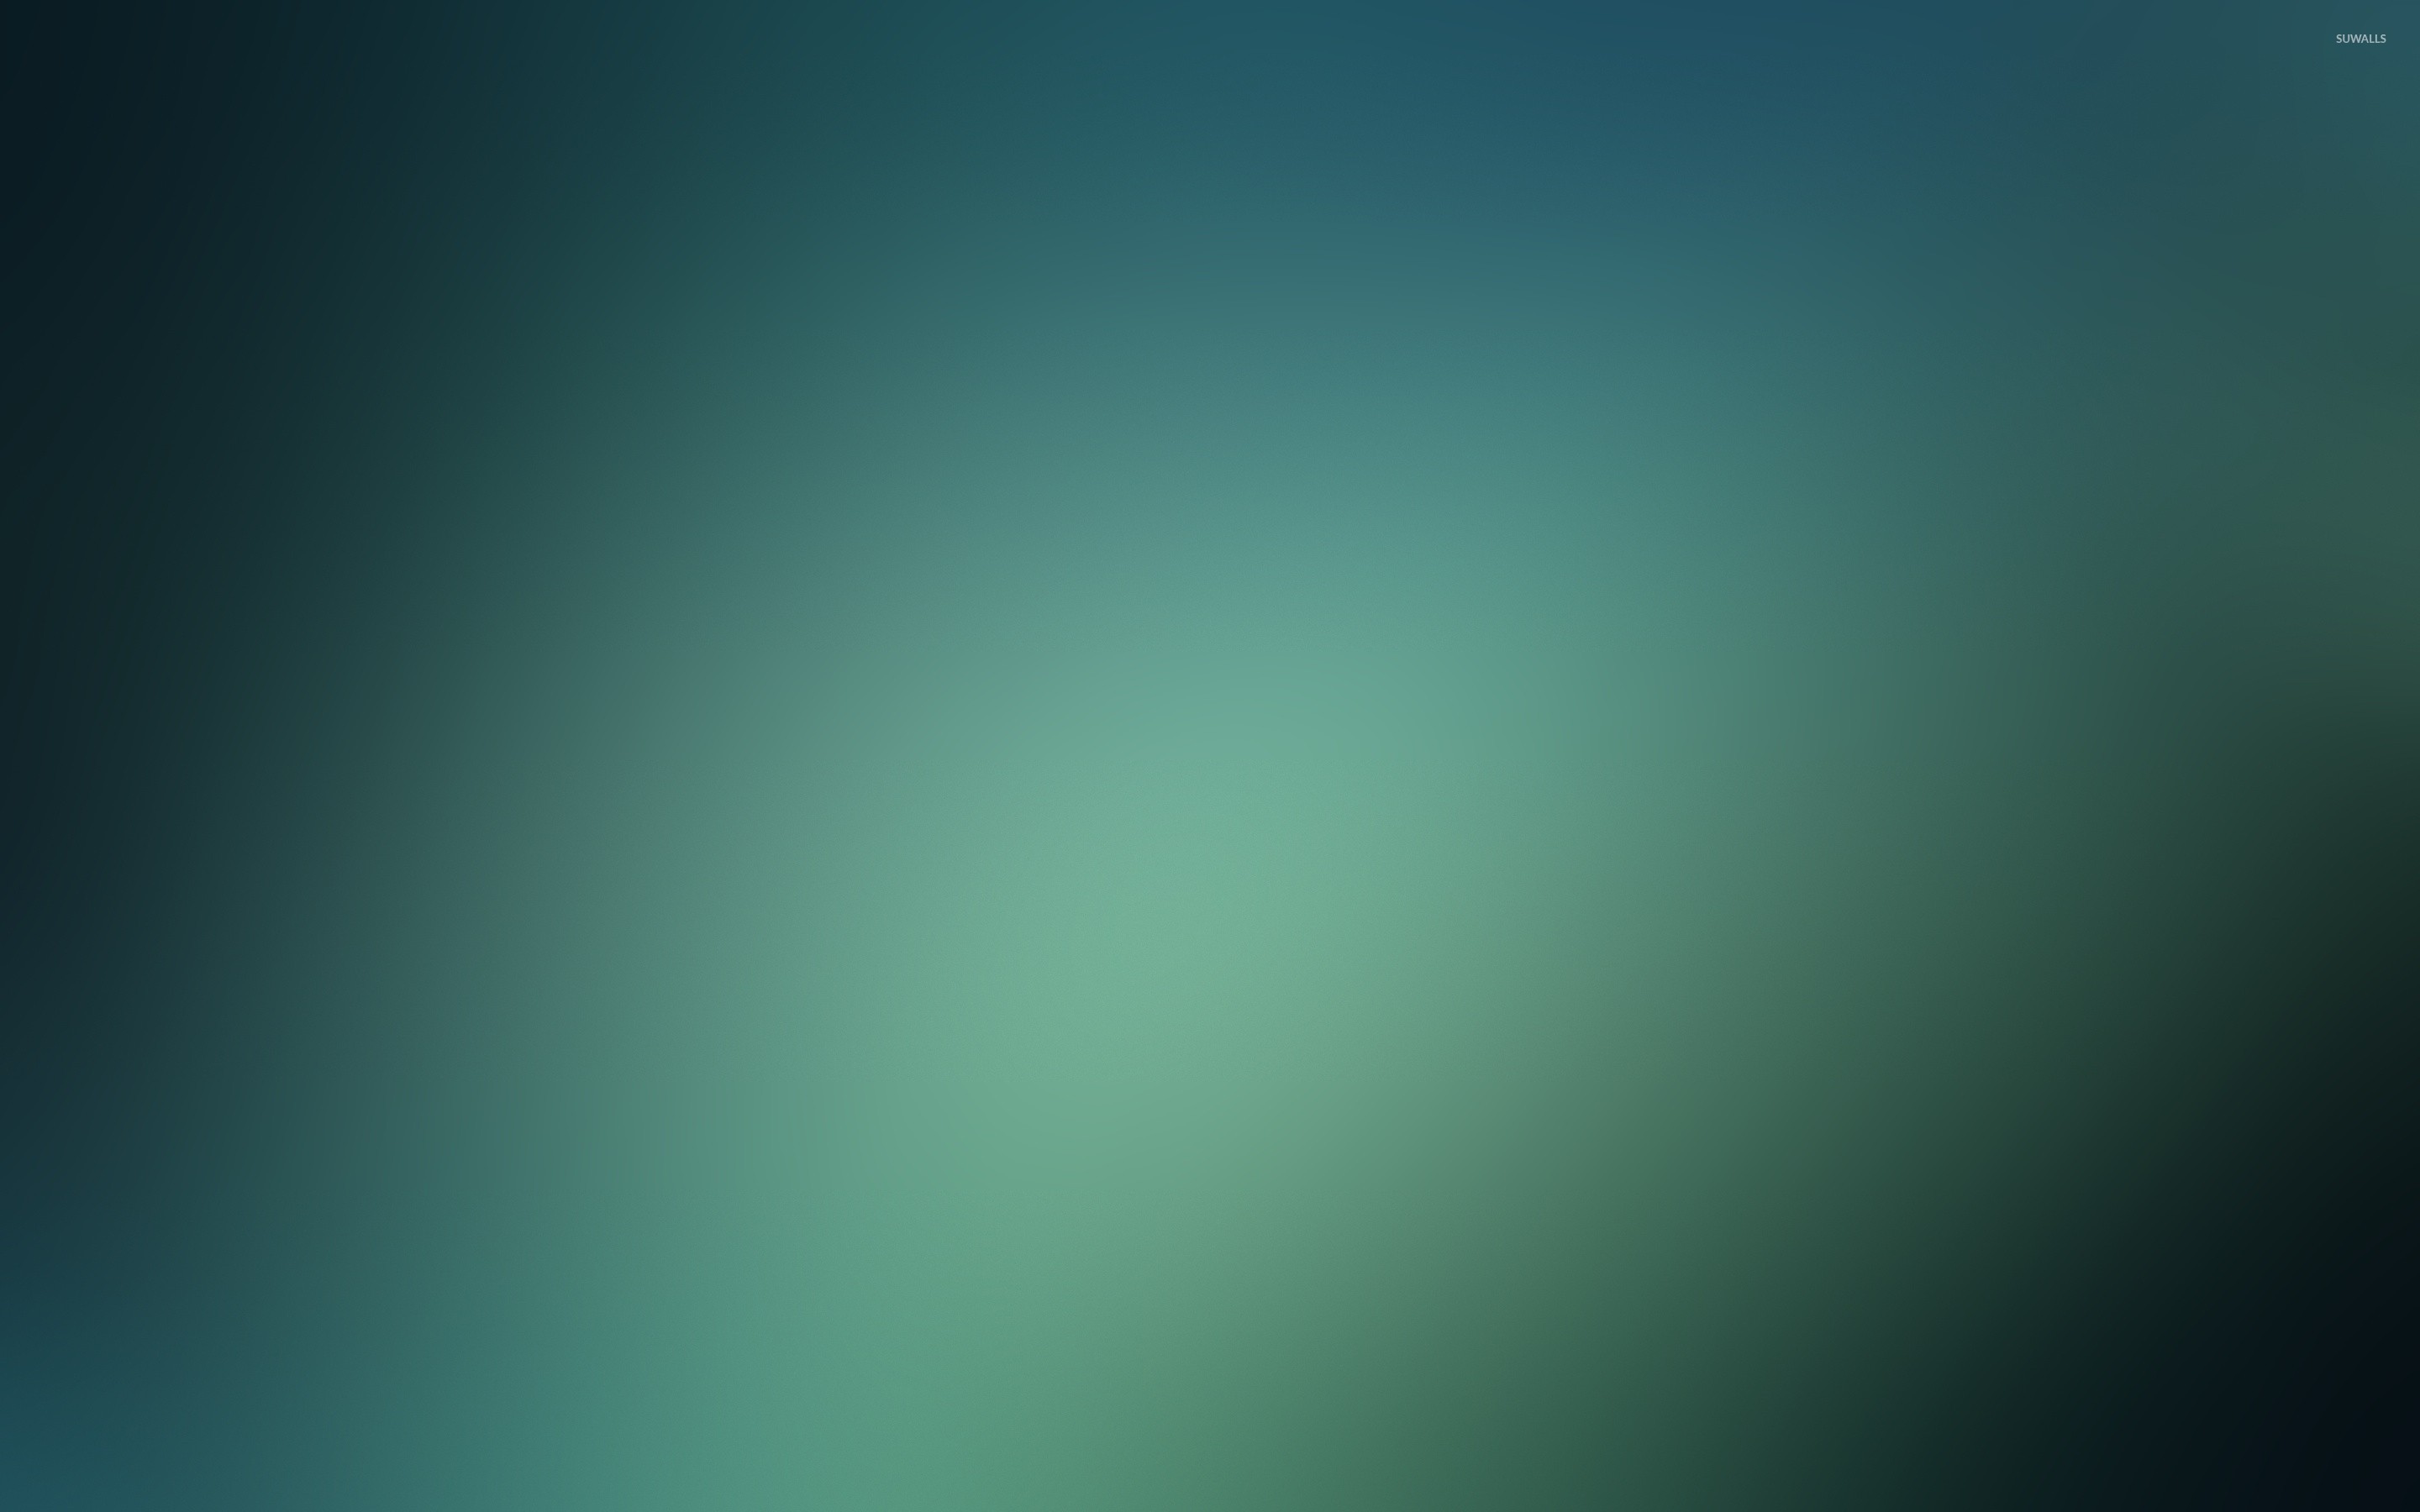 Blurry green spotlight wallpaper - Abstract wallpapers - #47757